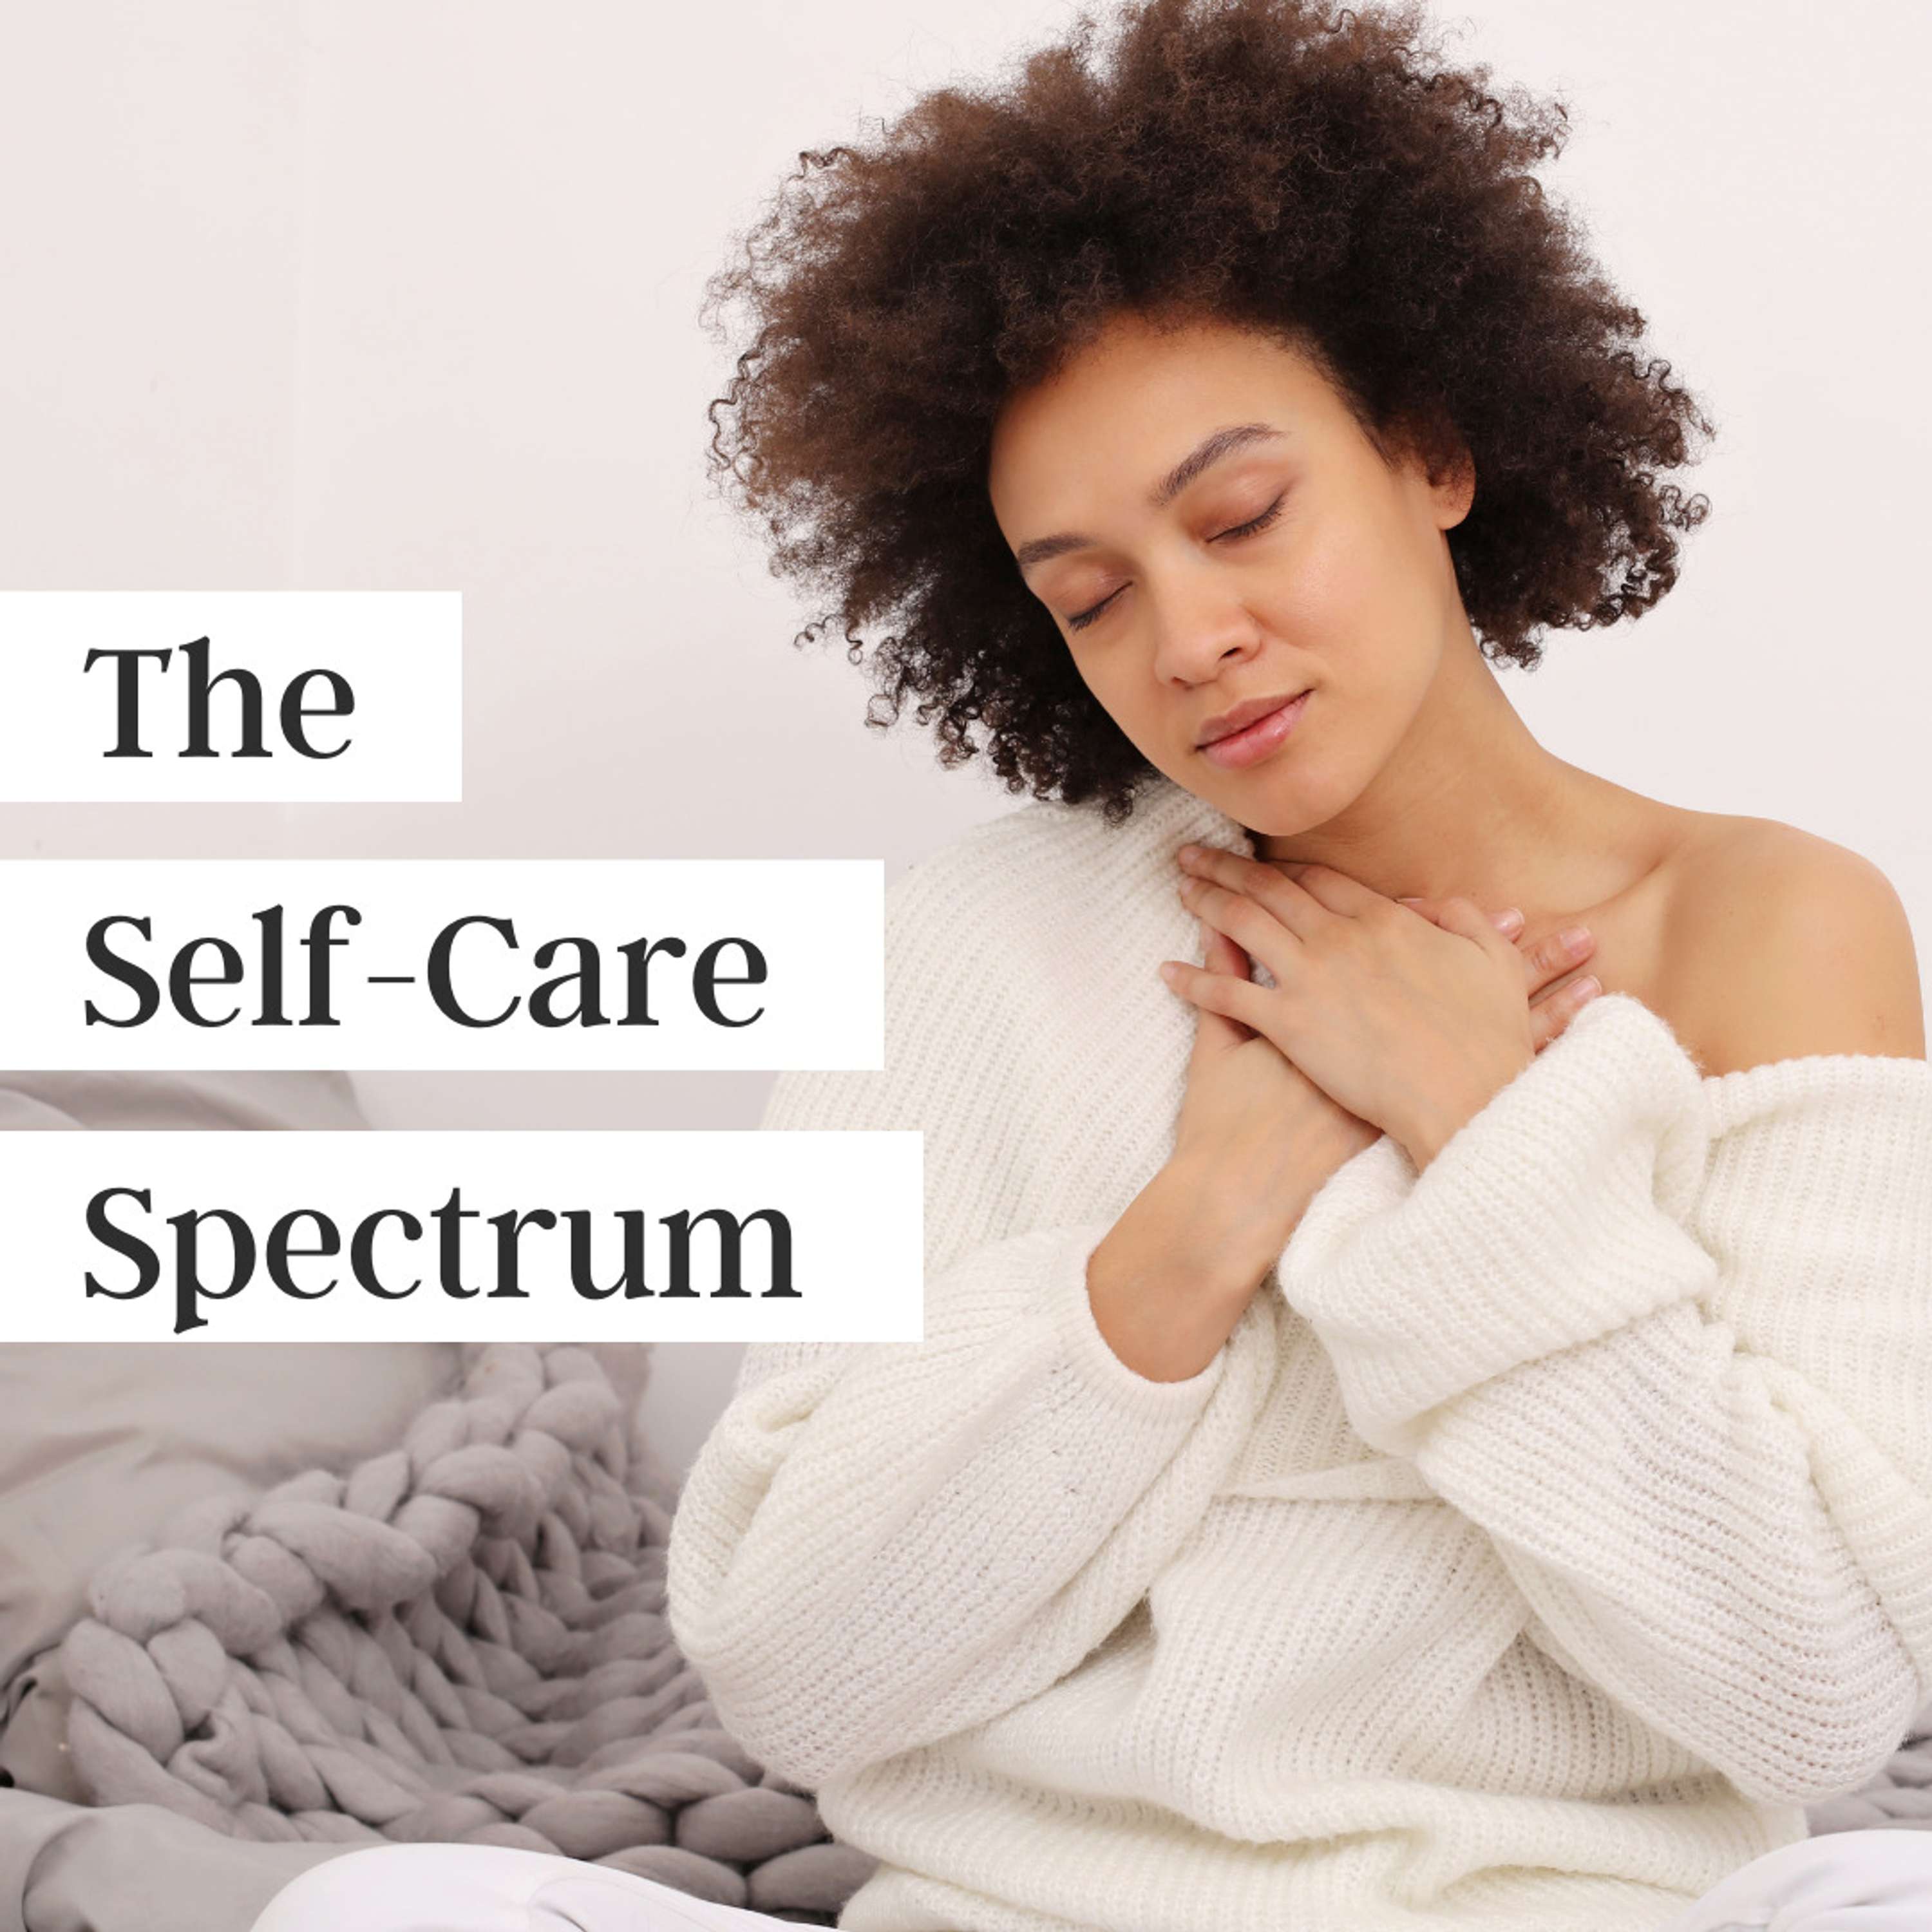 The Self-Care Spectrum